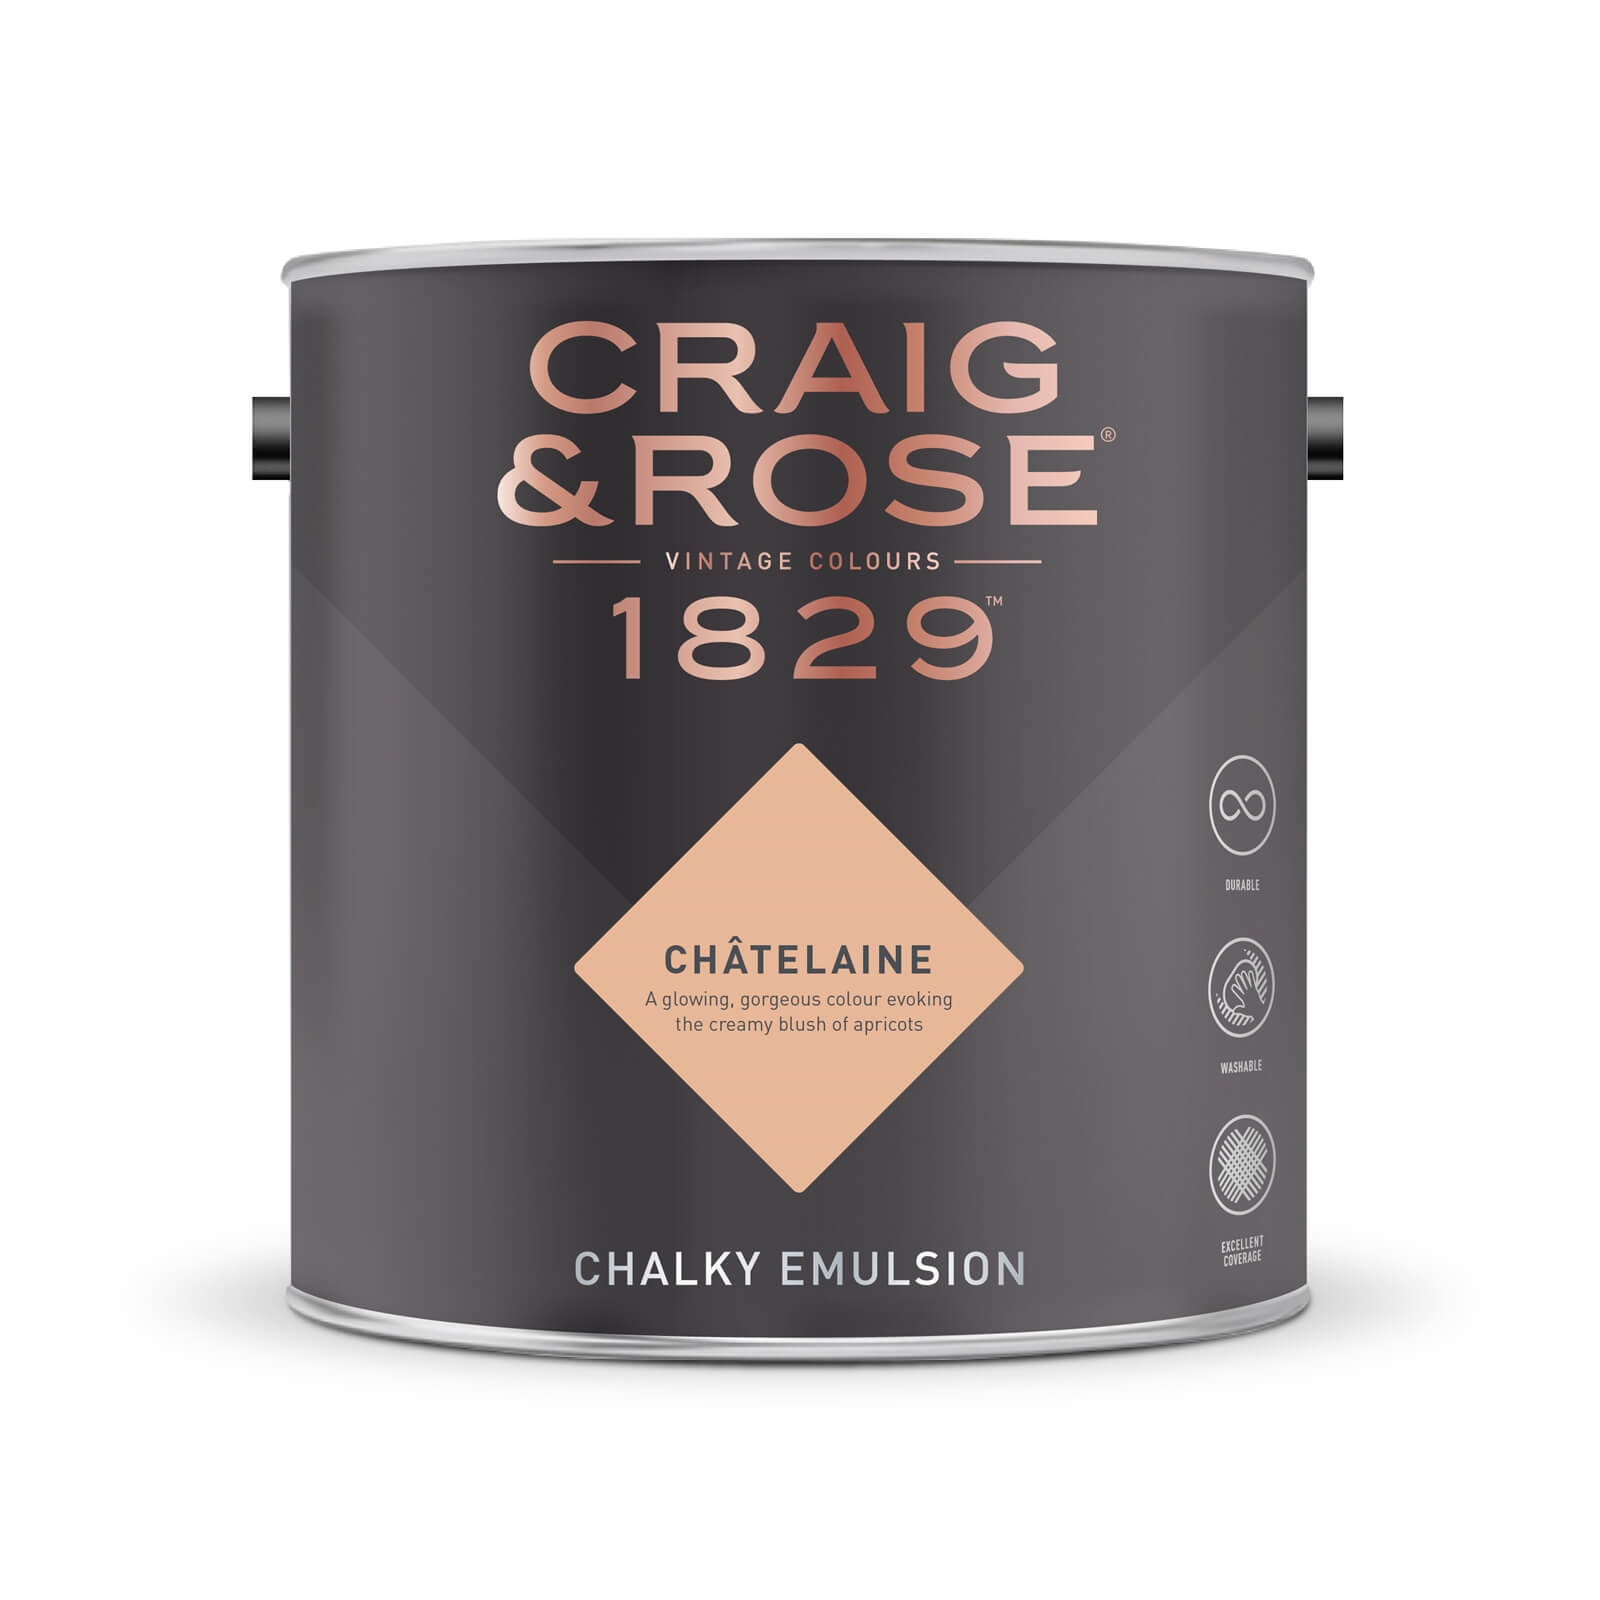 Craig & Rose 1829 Chalky Emulsion Paint Chatelaine - 5L